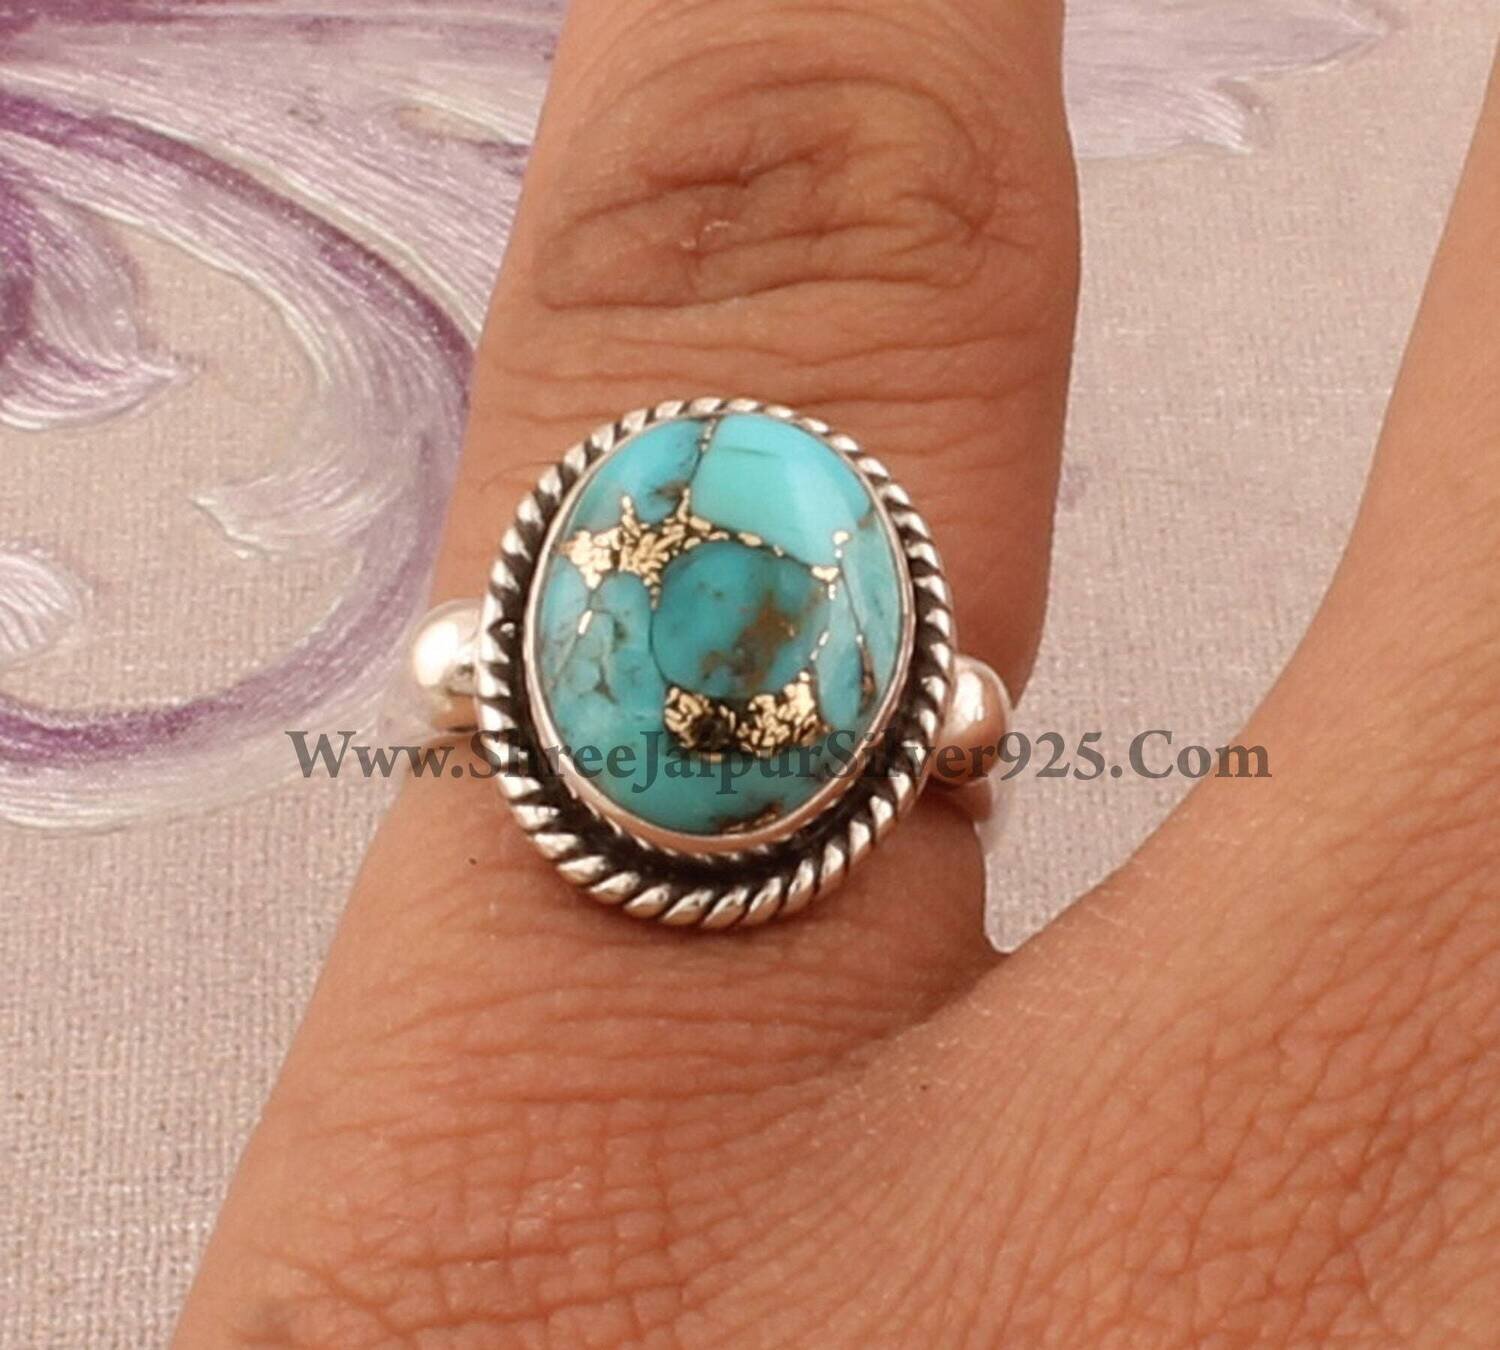 Blue Copper Turquoise Oval Gemstone 925 Sterling Silver Ring For Women, Designer Handmade Gemstone Silver Ring, Engagement Ring, Gift Idea